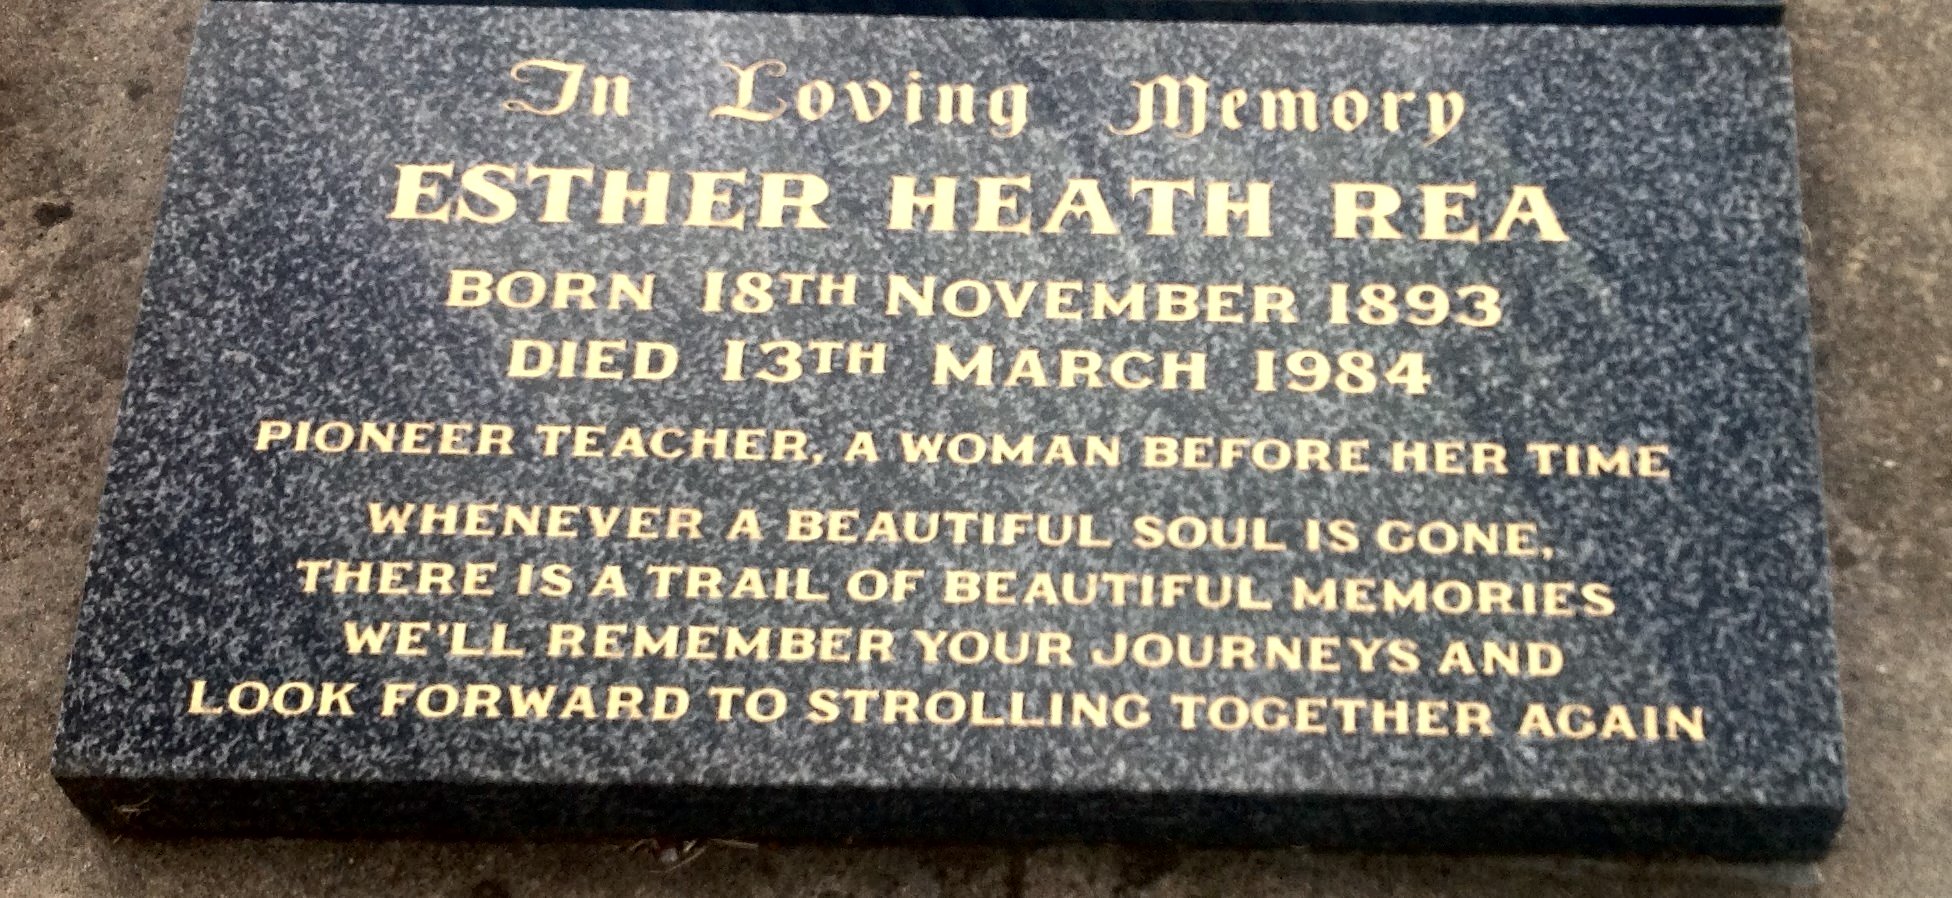 CHATFIELD Esther Heath 1894-1984 grave.jpg